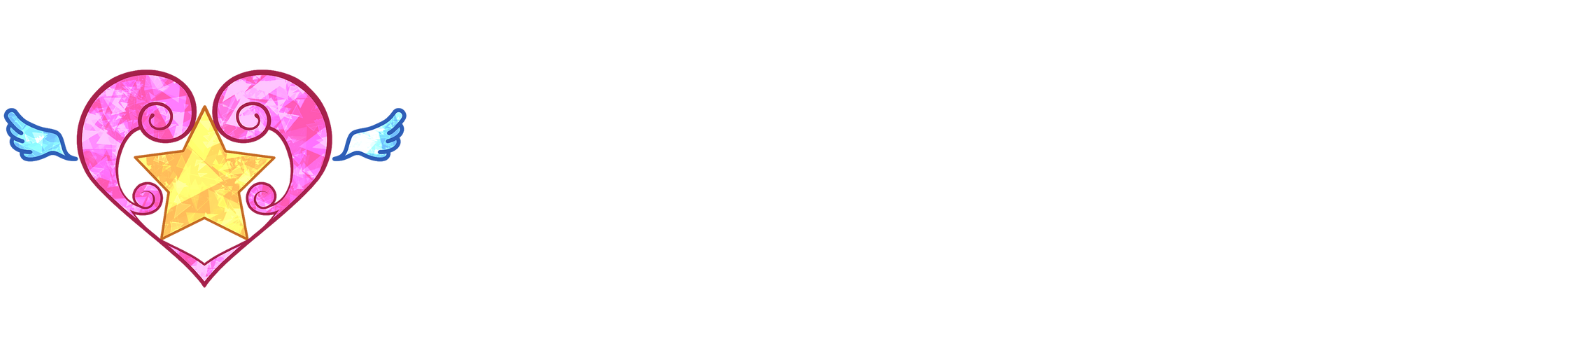 CoolGirl-PureStarHeart-